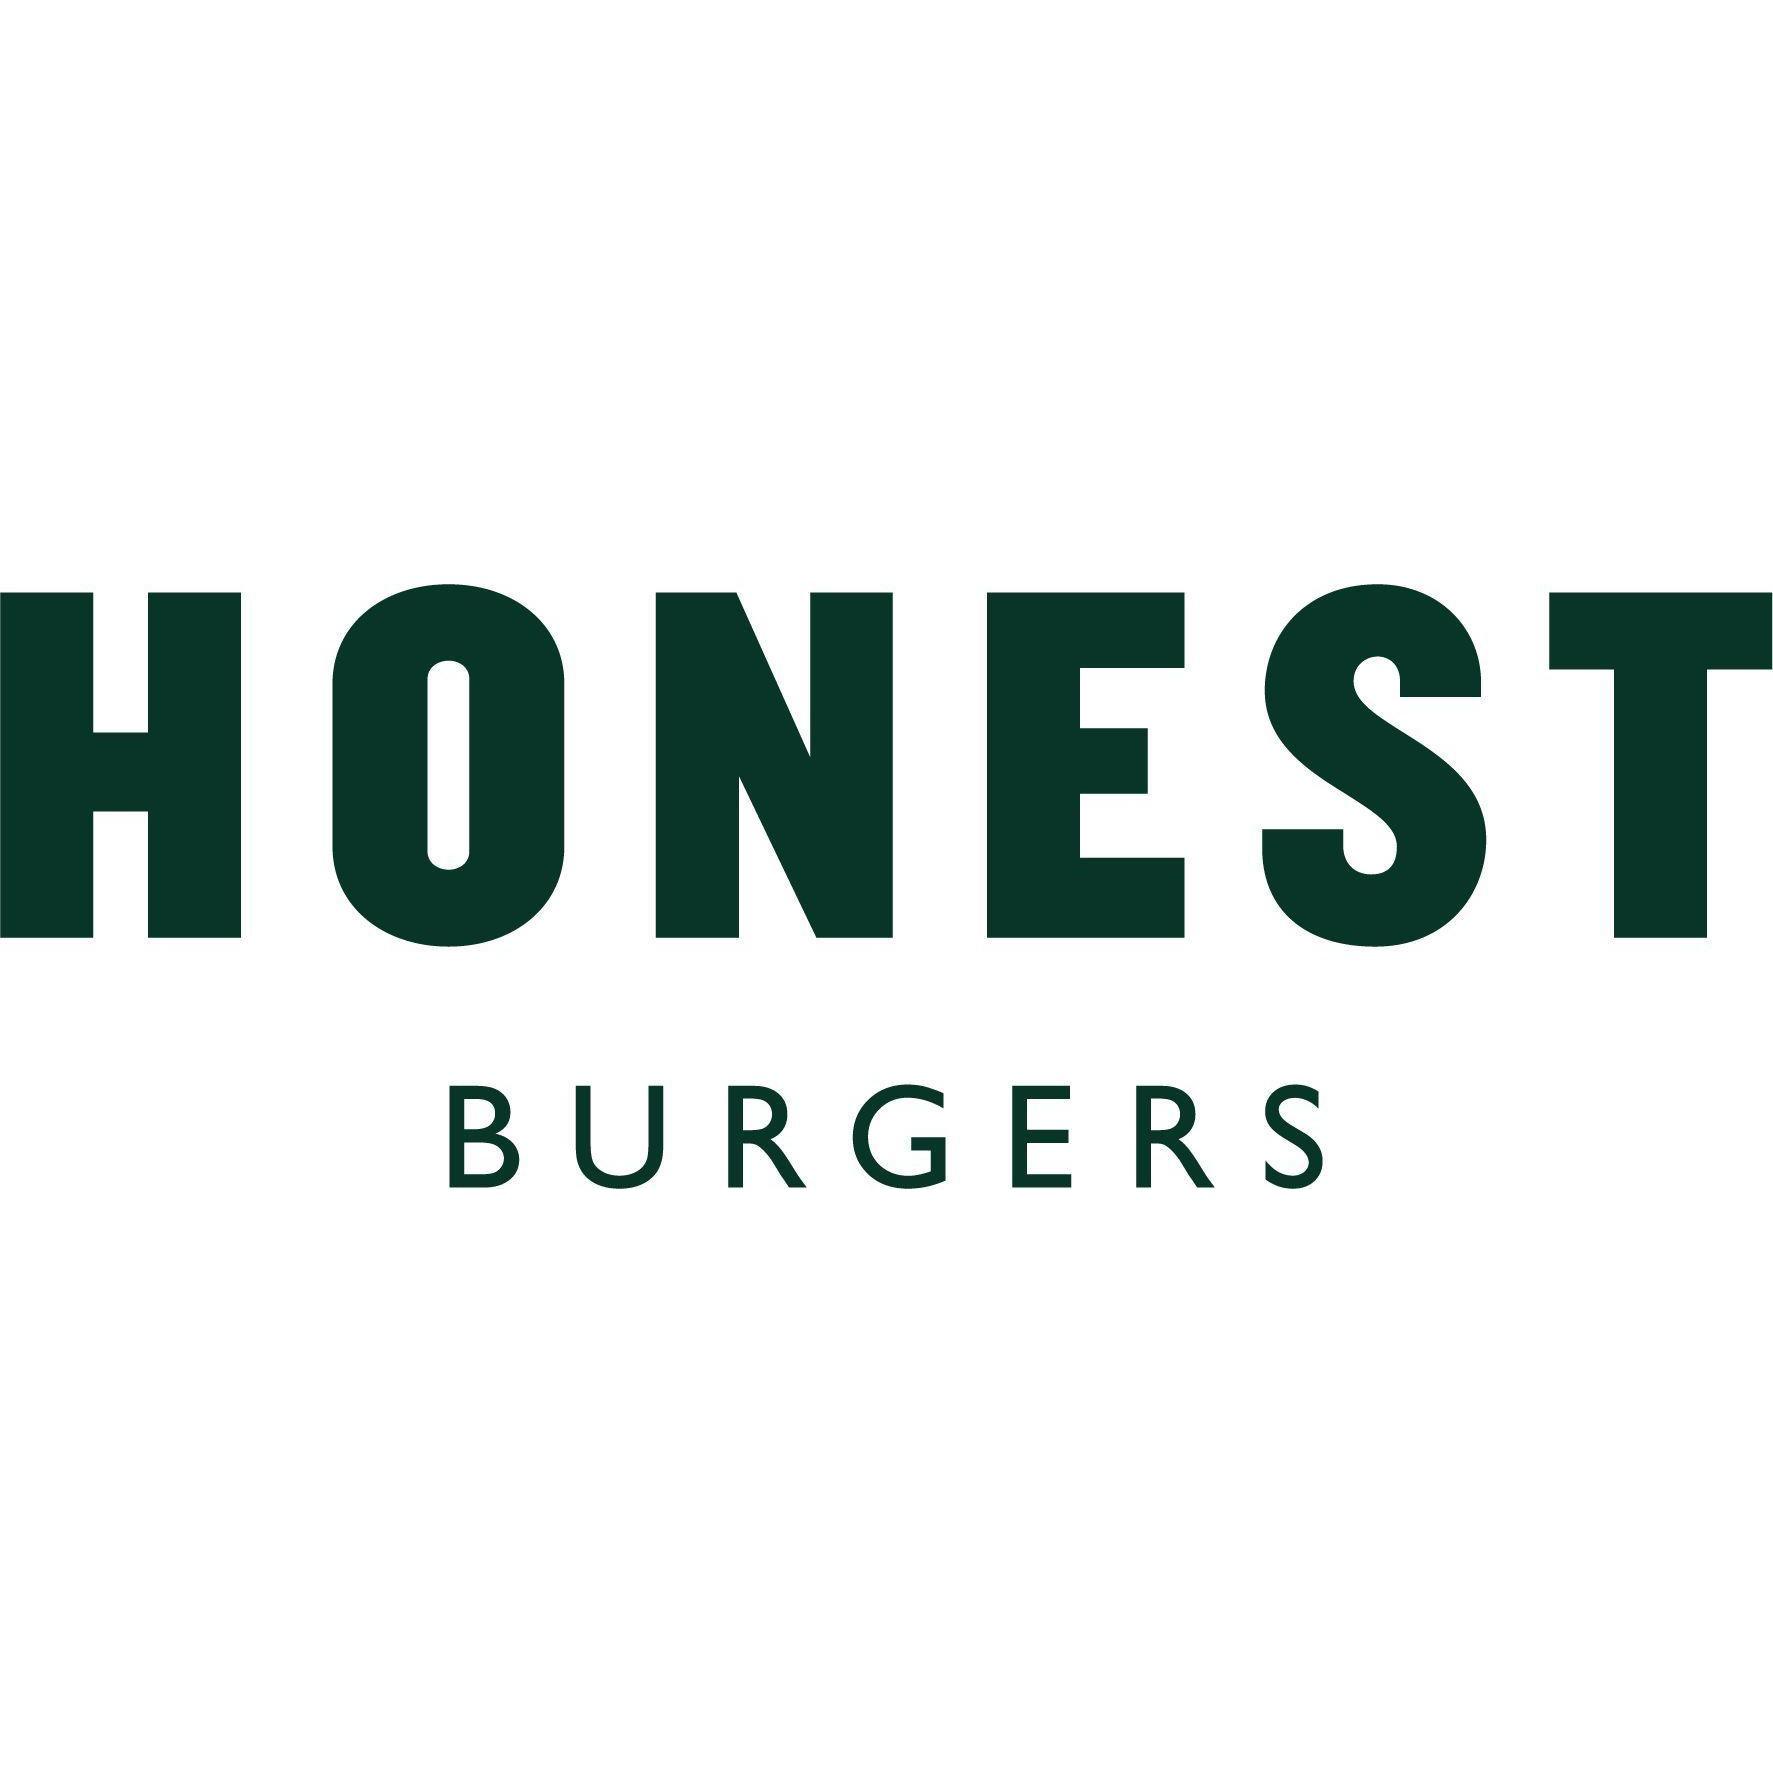 Honest Burgers Manchester - Manchester, Lancashire M3 3BT - 01616 763890 | ShowMeLocal.com